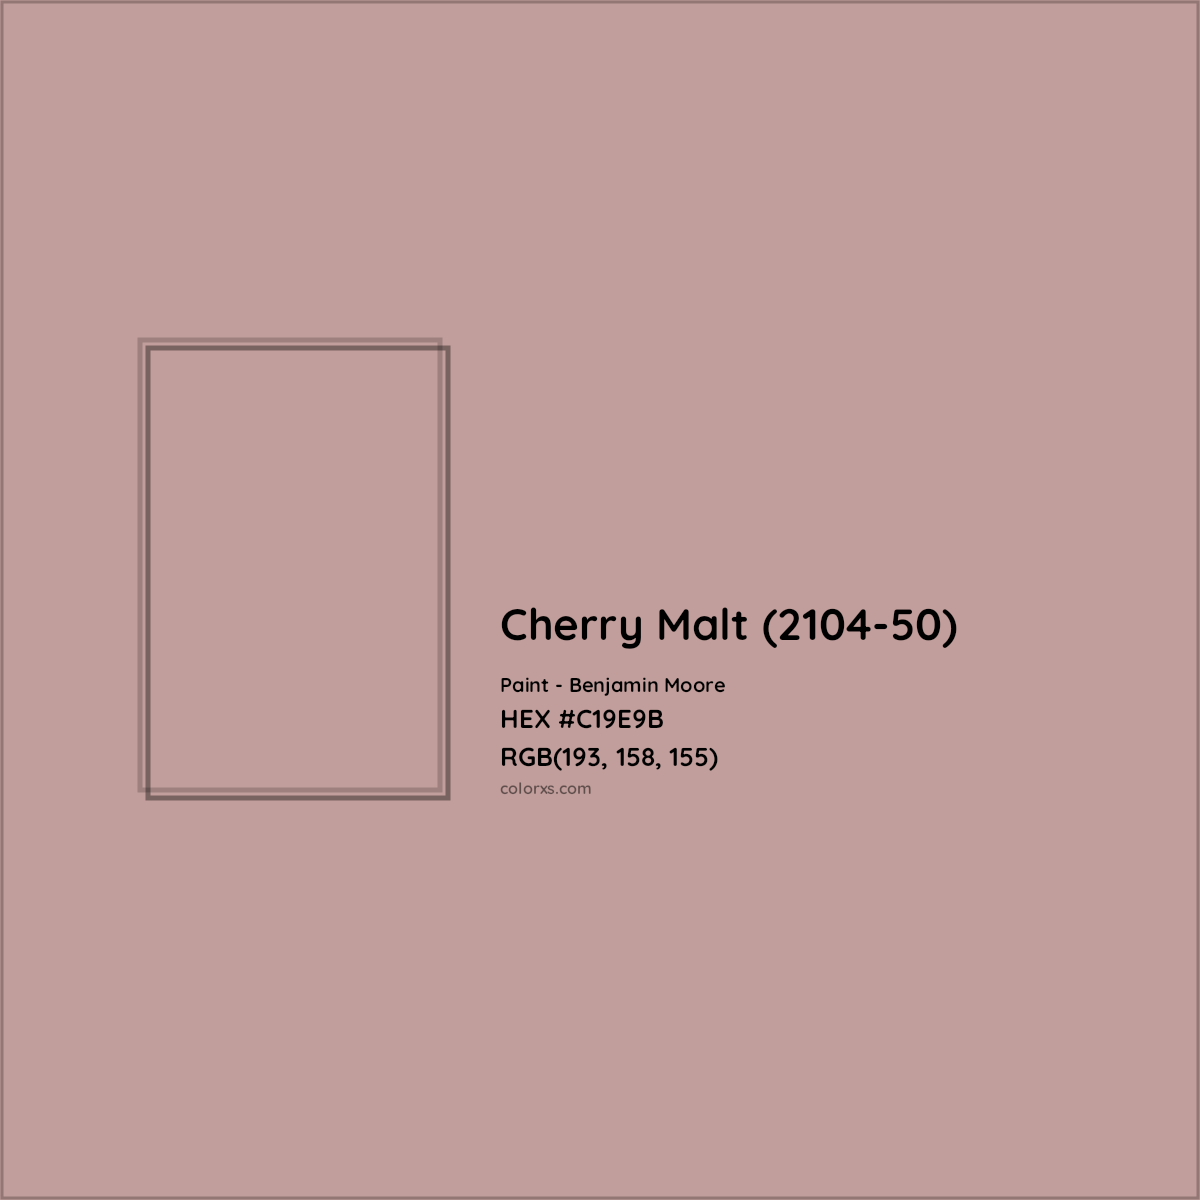 HEX #C19E9B Cherry Malt (2104-50) Paint Benjamin Moore - Color Code